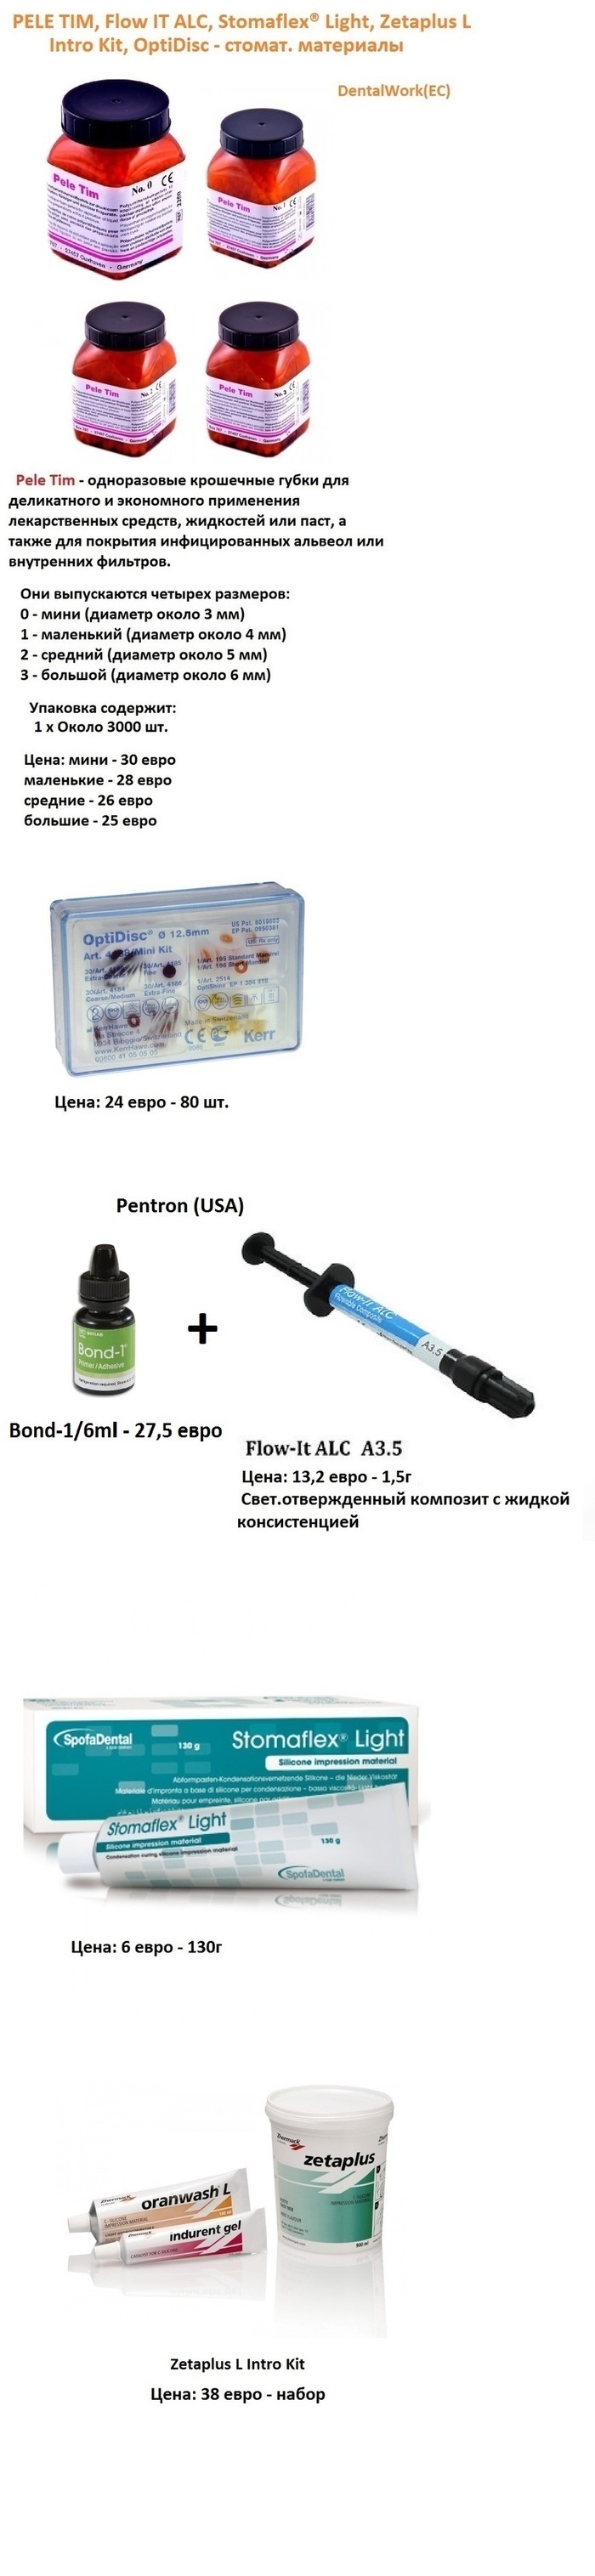 Zircon Dentsply - PFZ Liner многофункциональный препарат . Pele Tim, Flow IT ALC, SpofaDent, Zetaplus, Kerr Zooble.com.ua